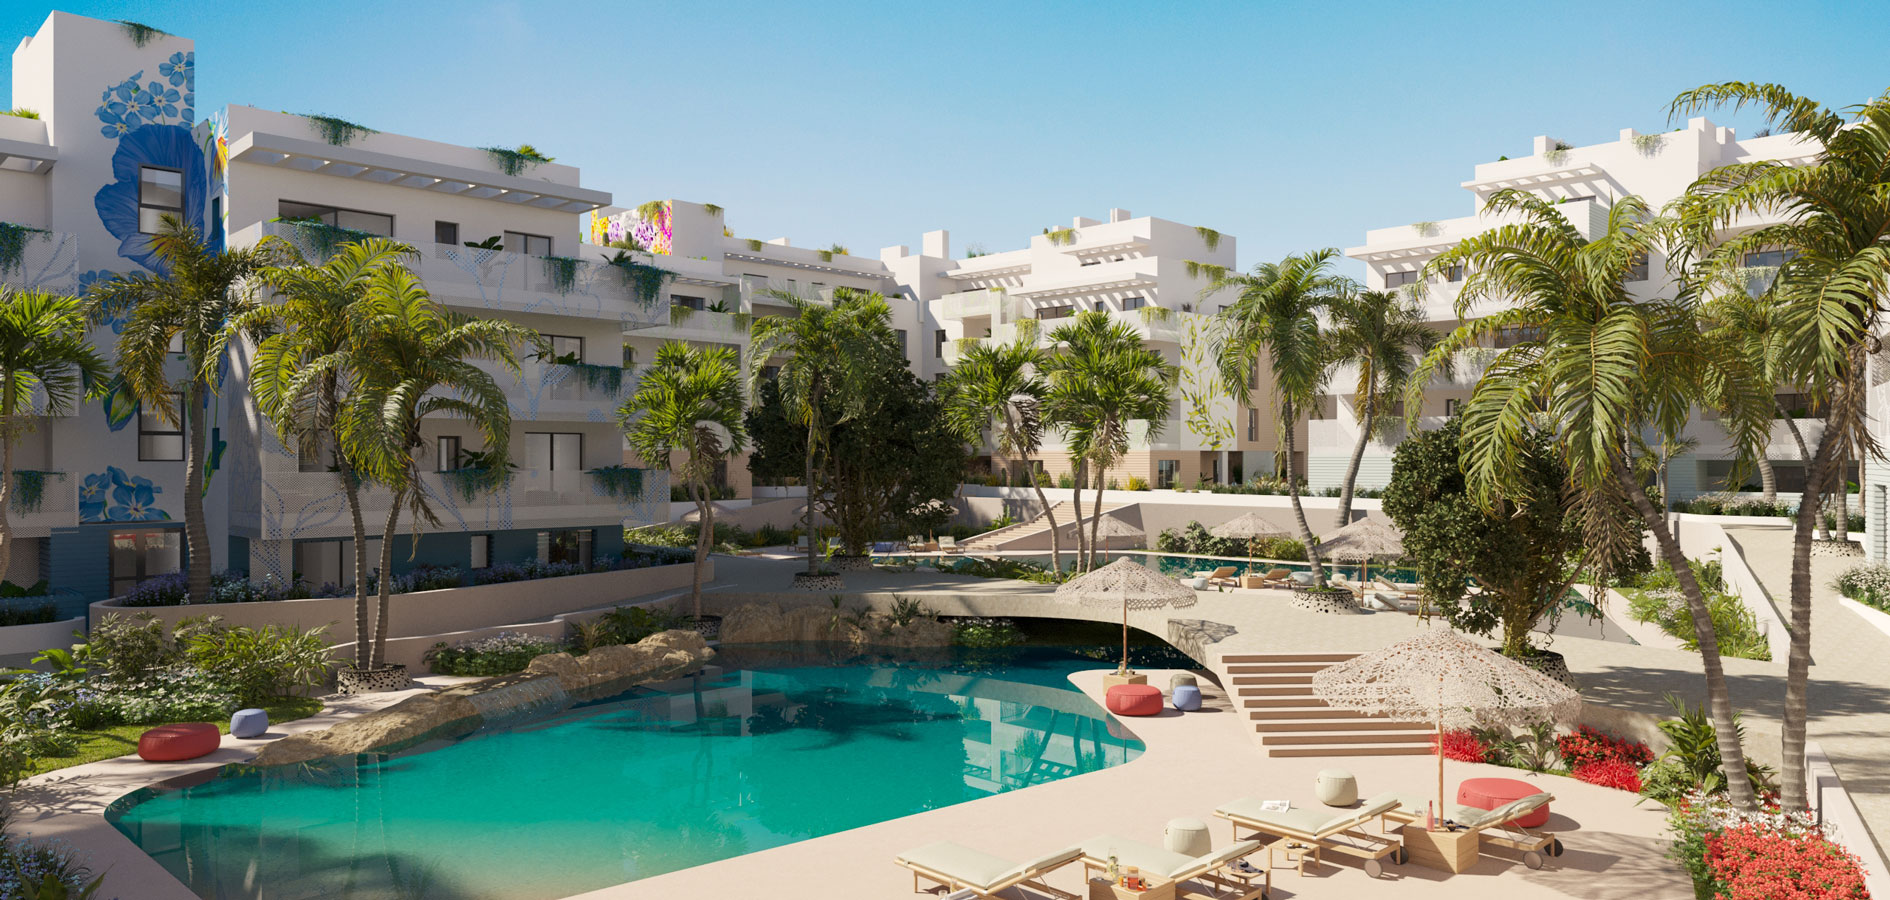 Weiteres spektakuläres Neubauprojekt auf Ibiza – CREO – Lifestyle Apartments Ibiza